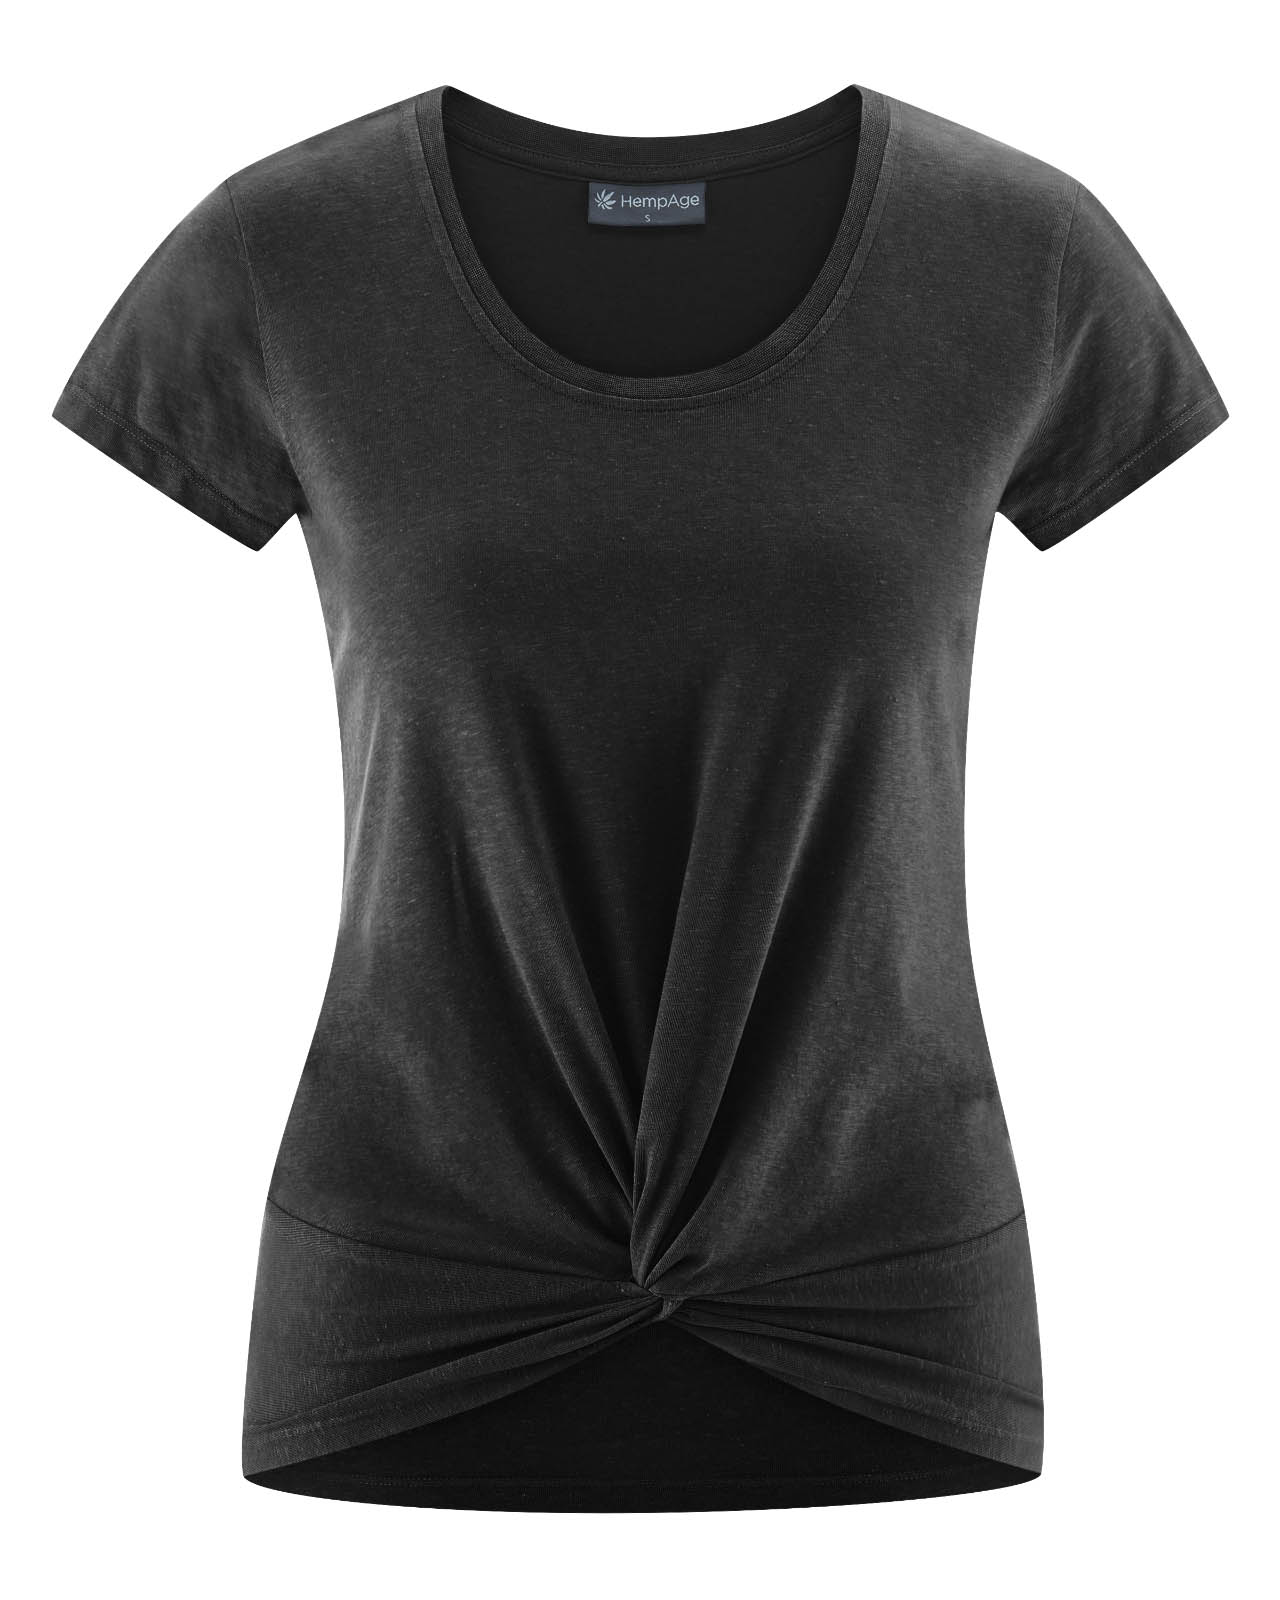 https://www.fairkleidet.com/media/image/60/0a/60/Yoga-Shirt-Damen-Kurzarm-DH652_a_black.jpg